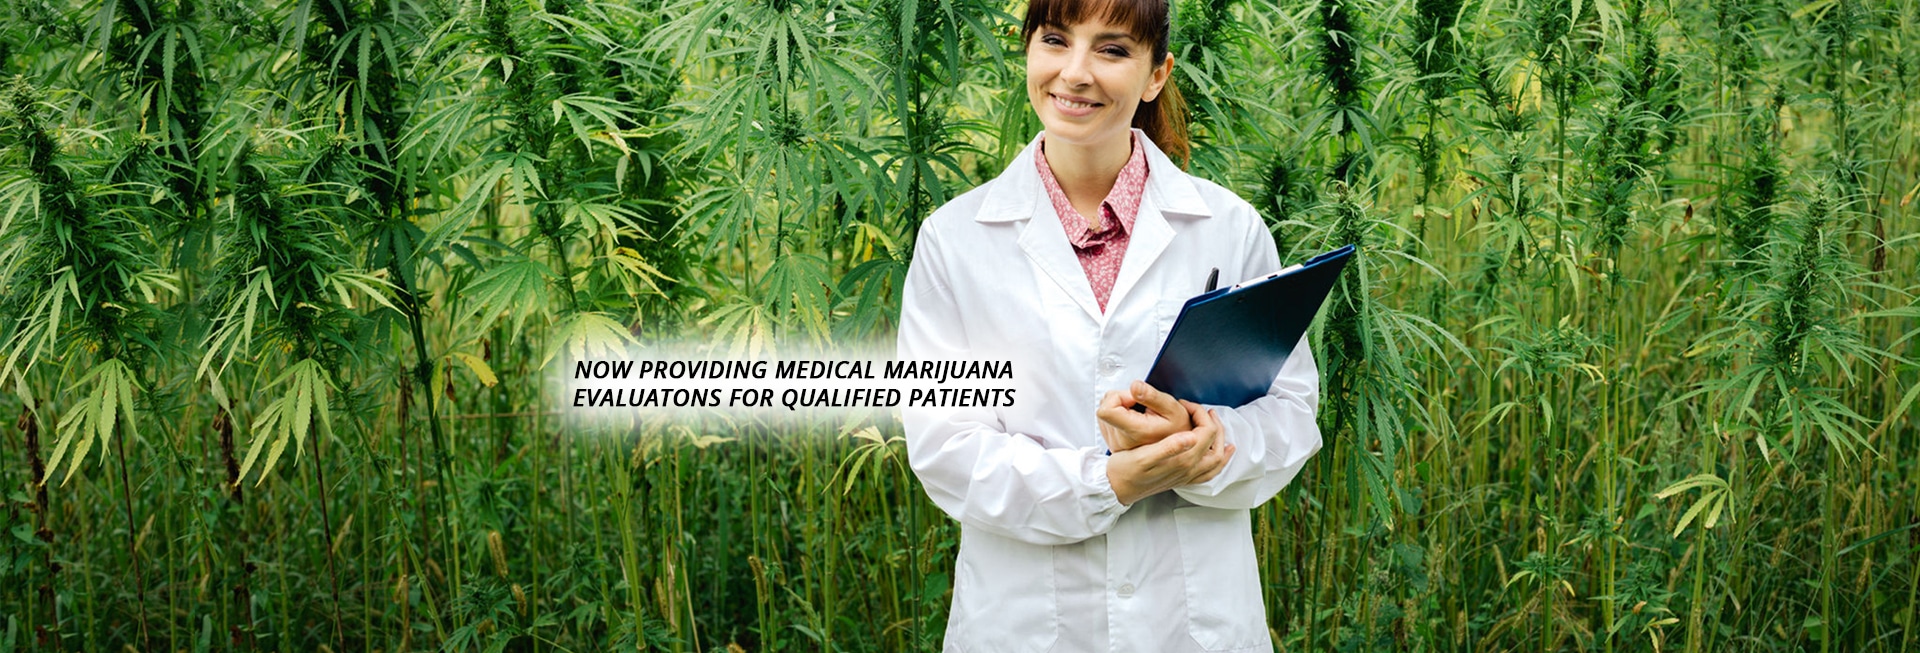 medical-cannabis-slide